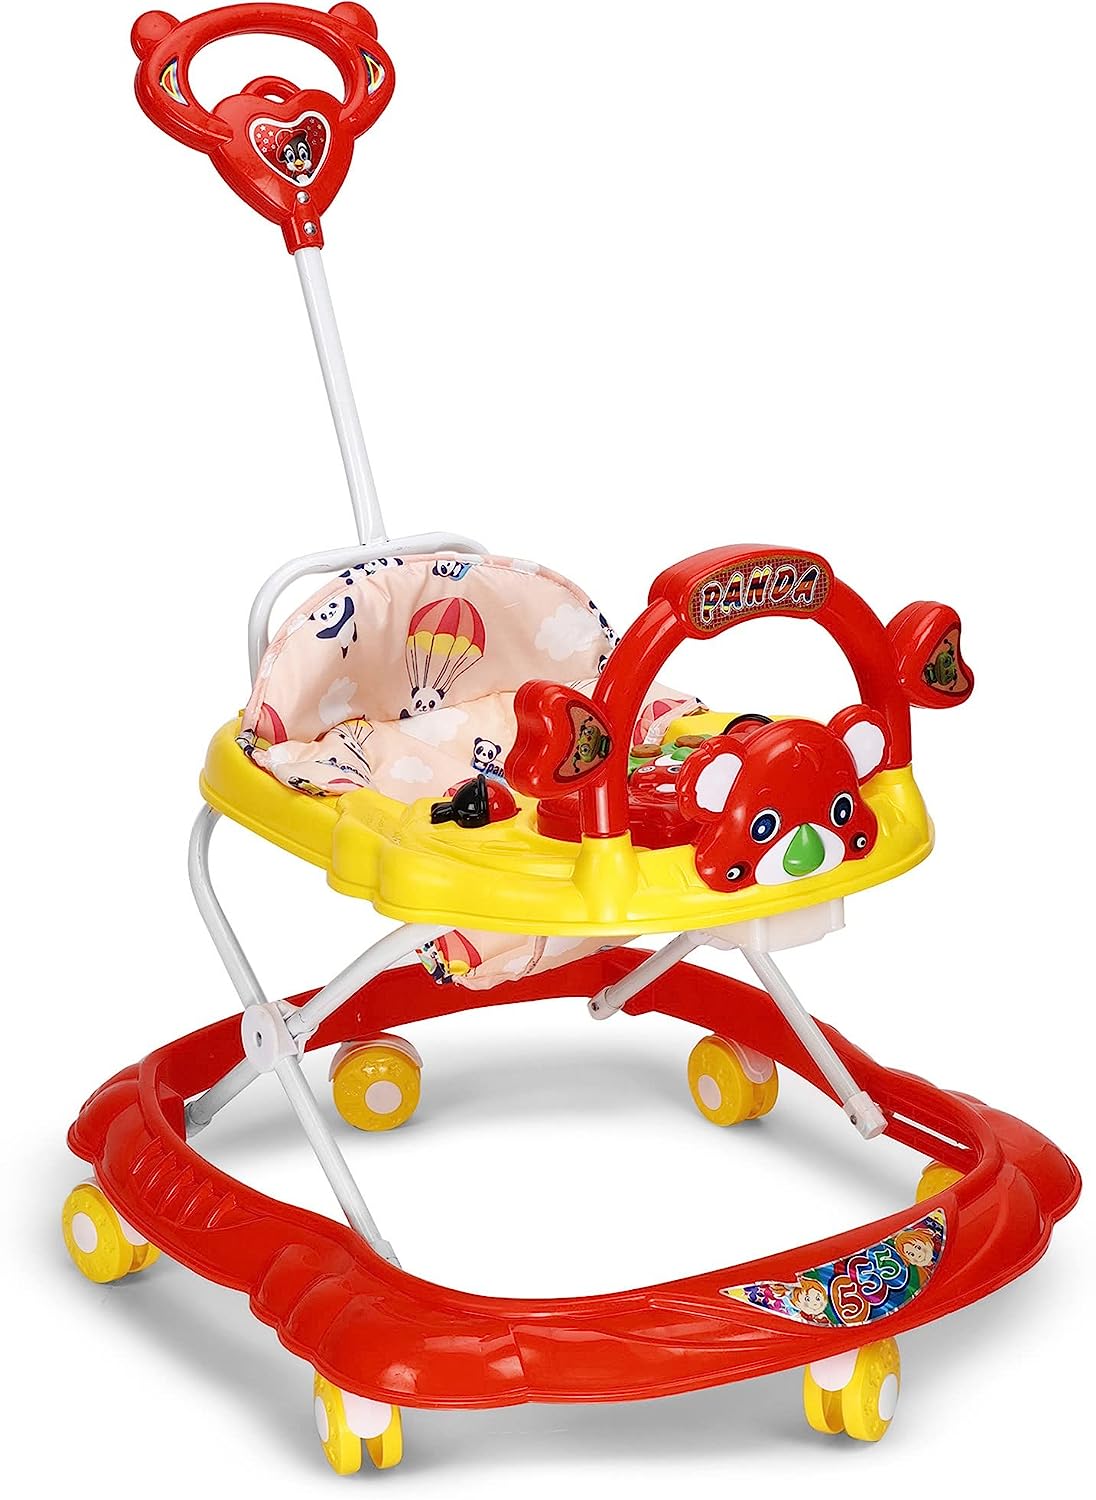 Panda 555 Baby Walker: Height-Adjustable Musical Walker For Kids-Red